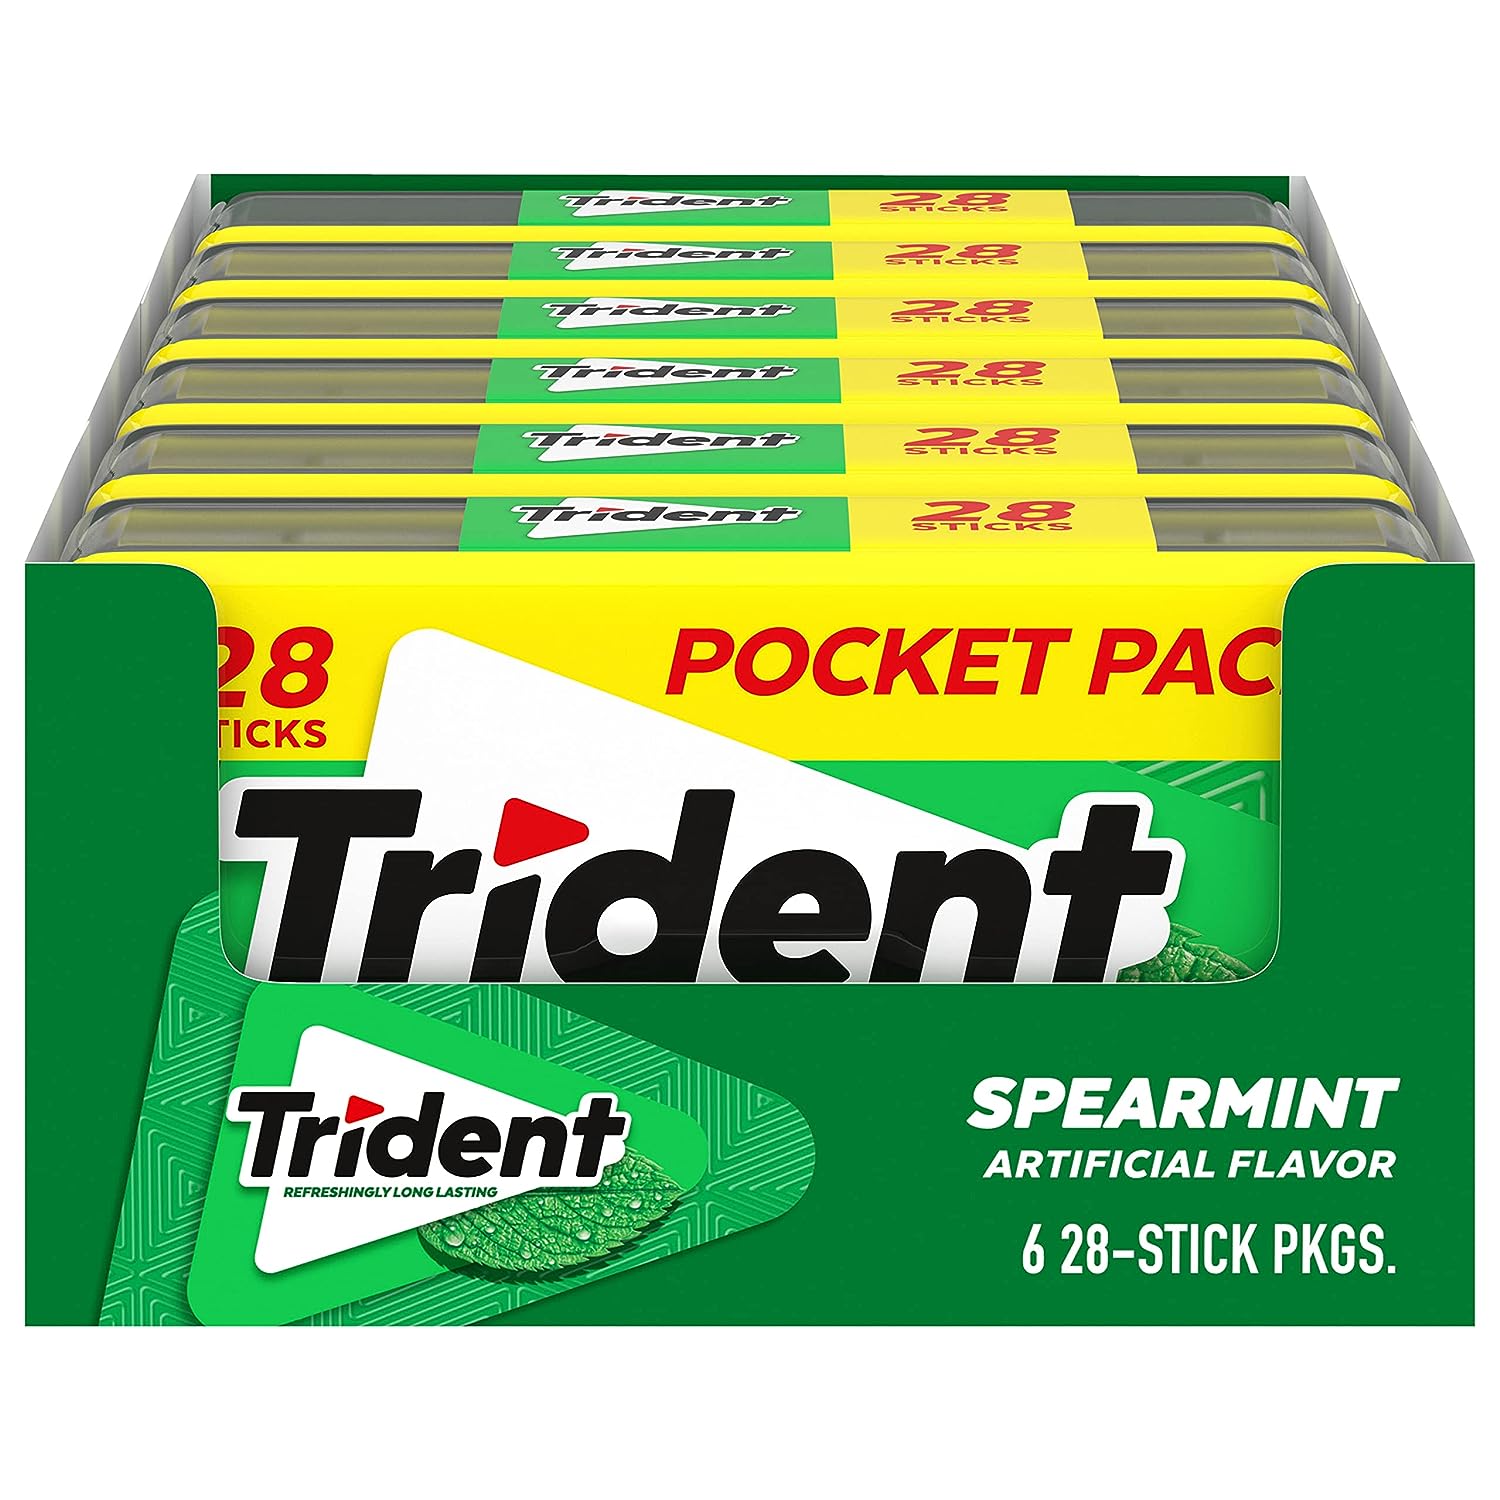 Trident Spearmint Gum Pocket Pack 28 Sticks